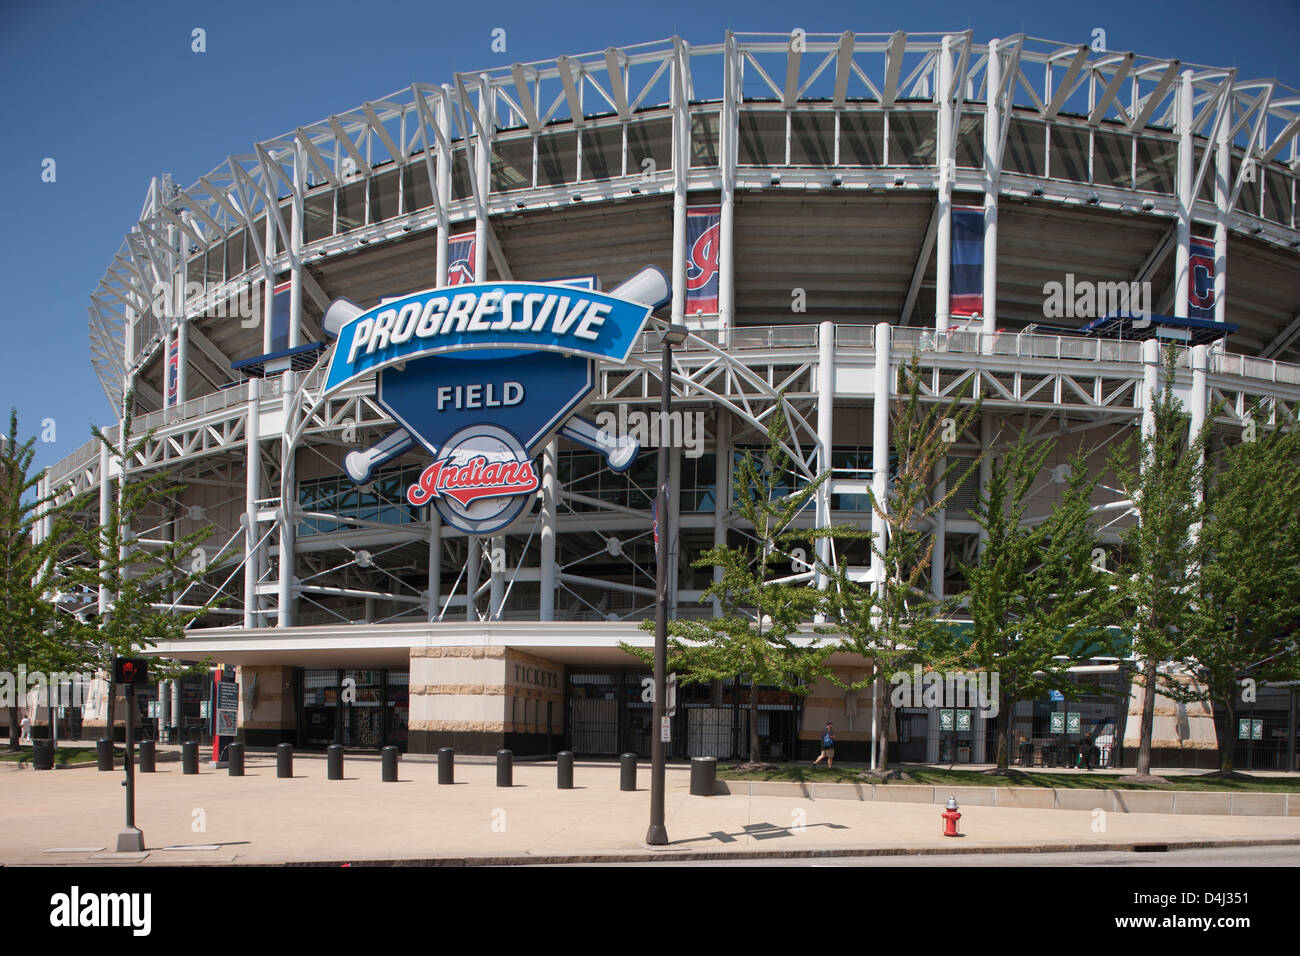 PROGRESSIVE FIELD ZEICHEN (© PROGRESSIVE CORP 2008) Cleveland Indians Baseball Stadium (© HOK Sport 2016) Downtown Cleveland, Ohio USA Stockfoto